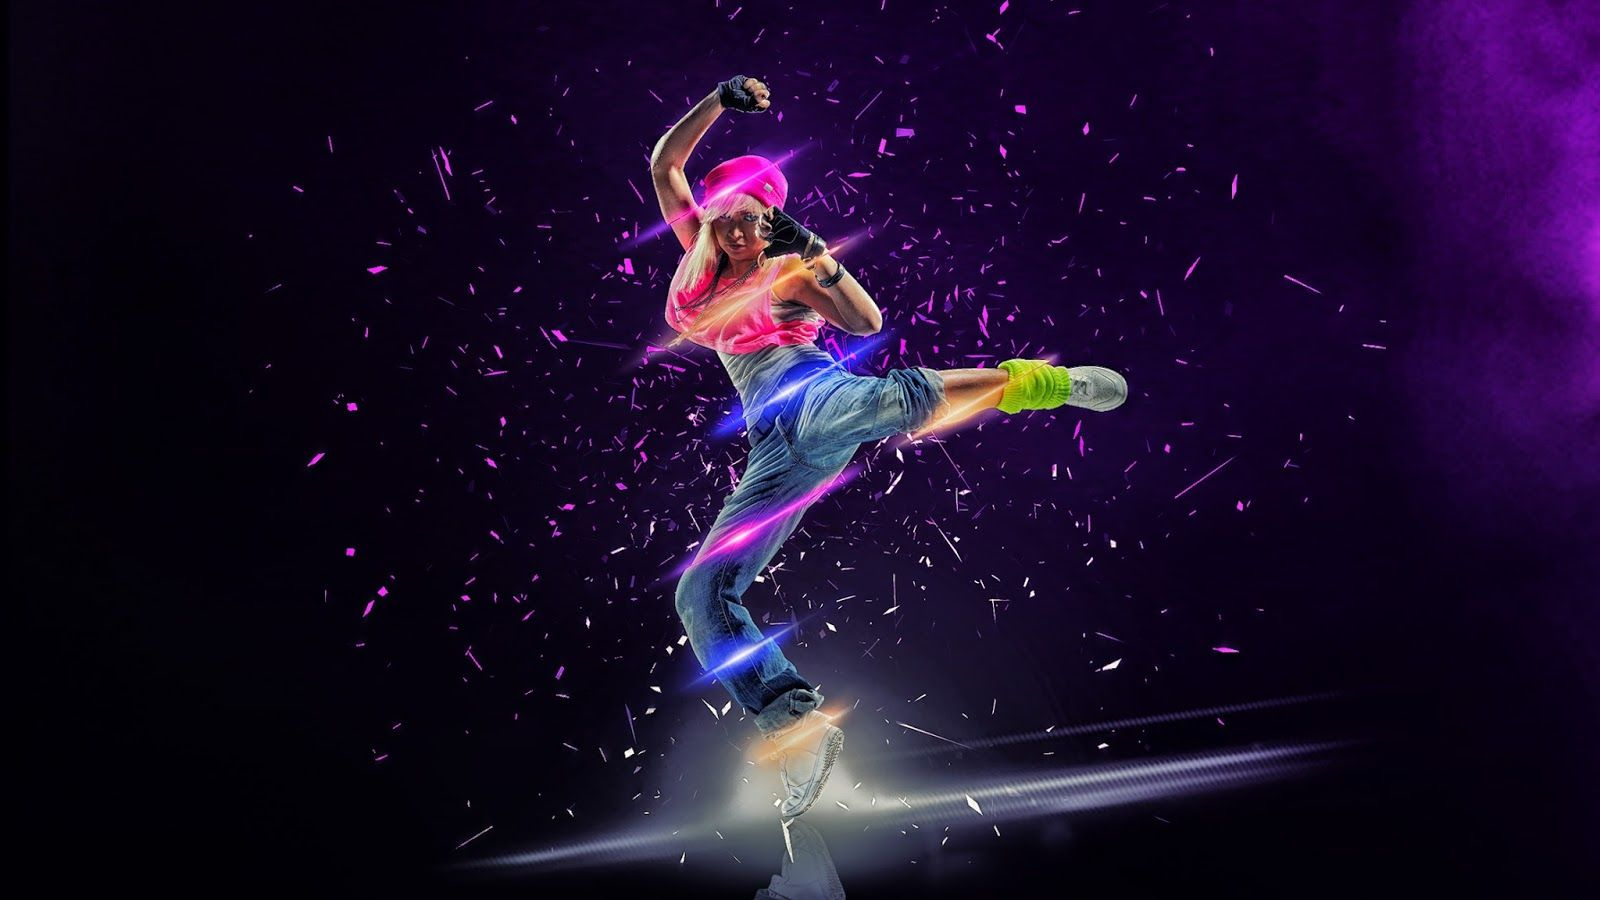 500 Dancer Pictures HD  Download Free Images on Unsplash